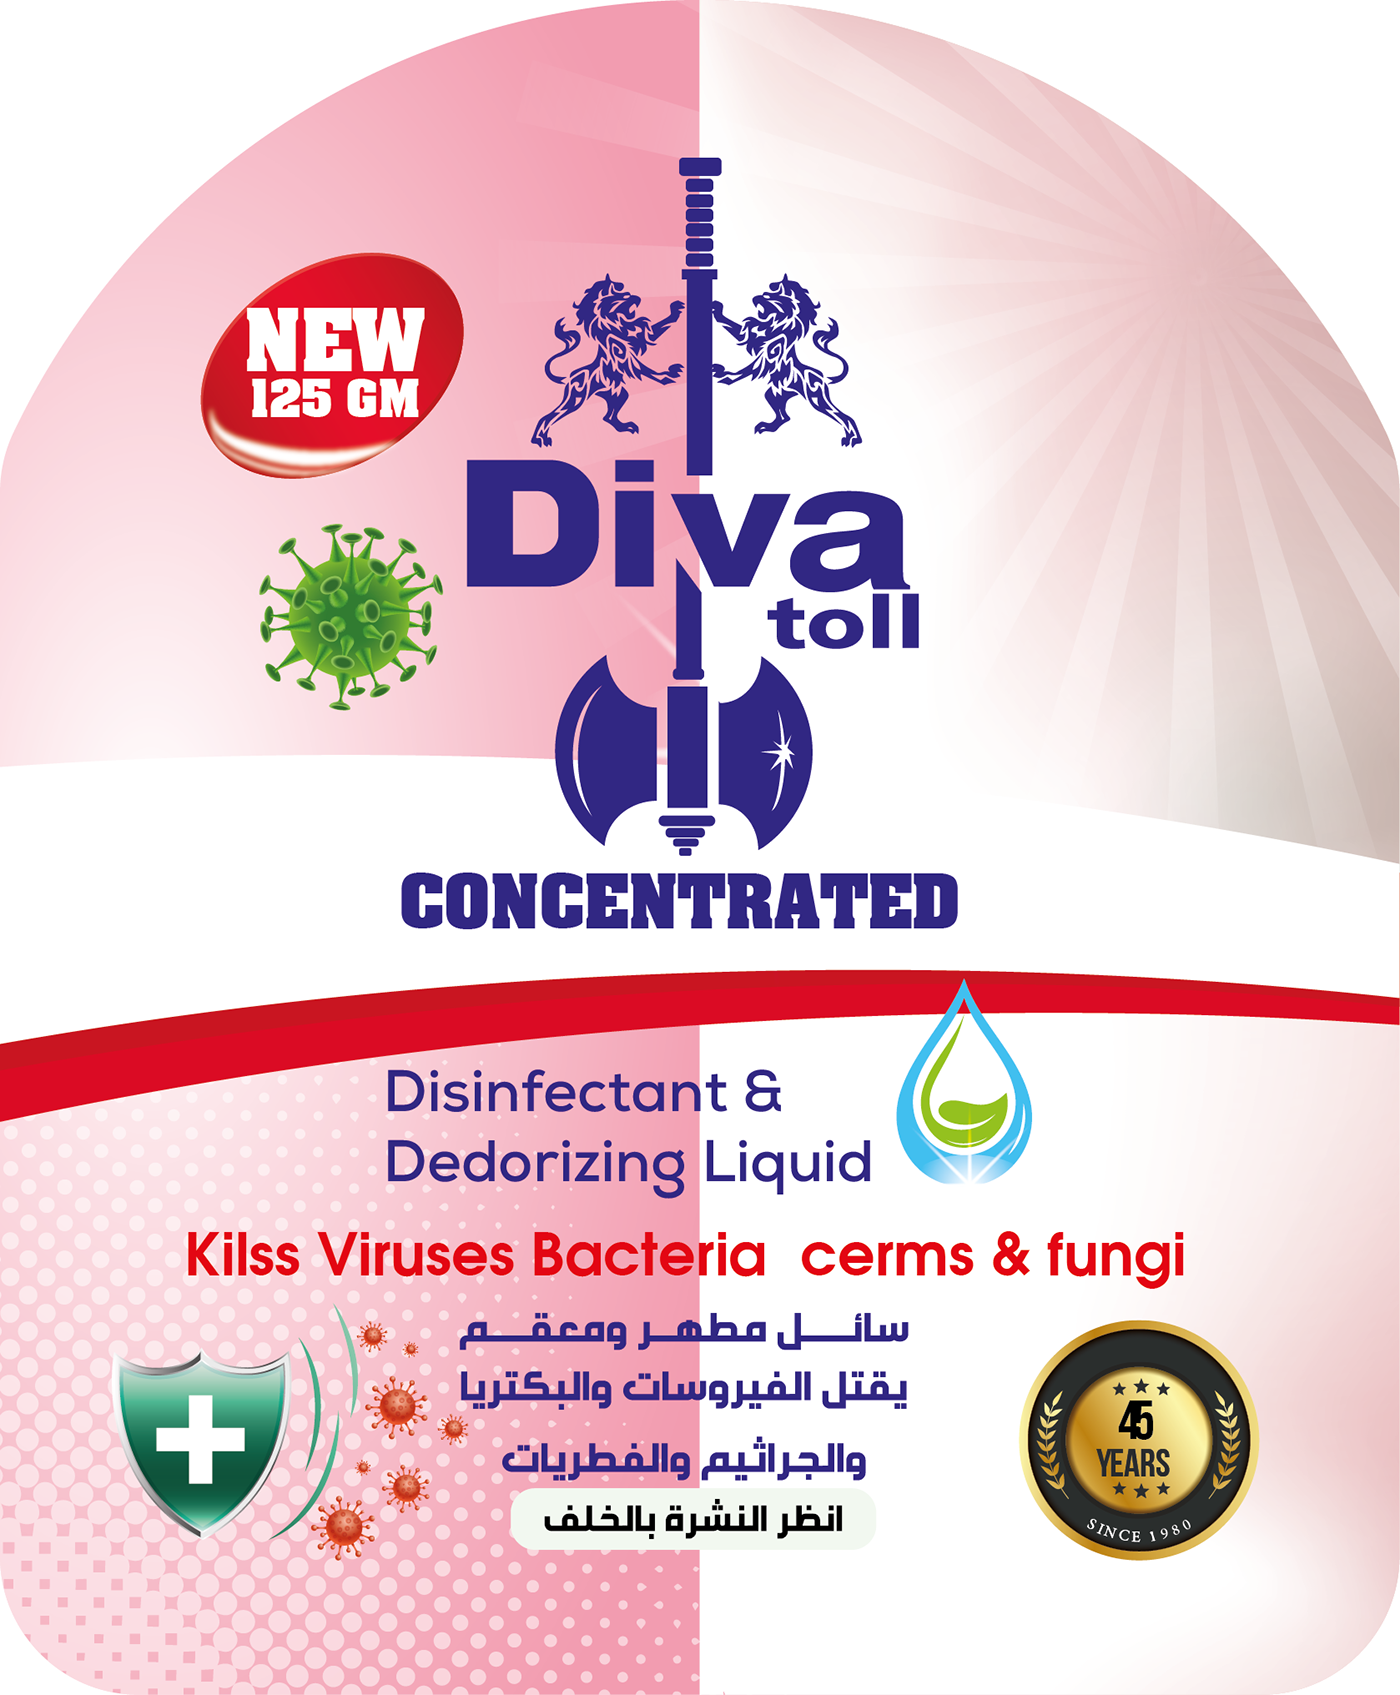 Bacteria care home Clean Product creative dedorizing liquid diva toll kills viruses Mockup